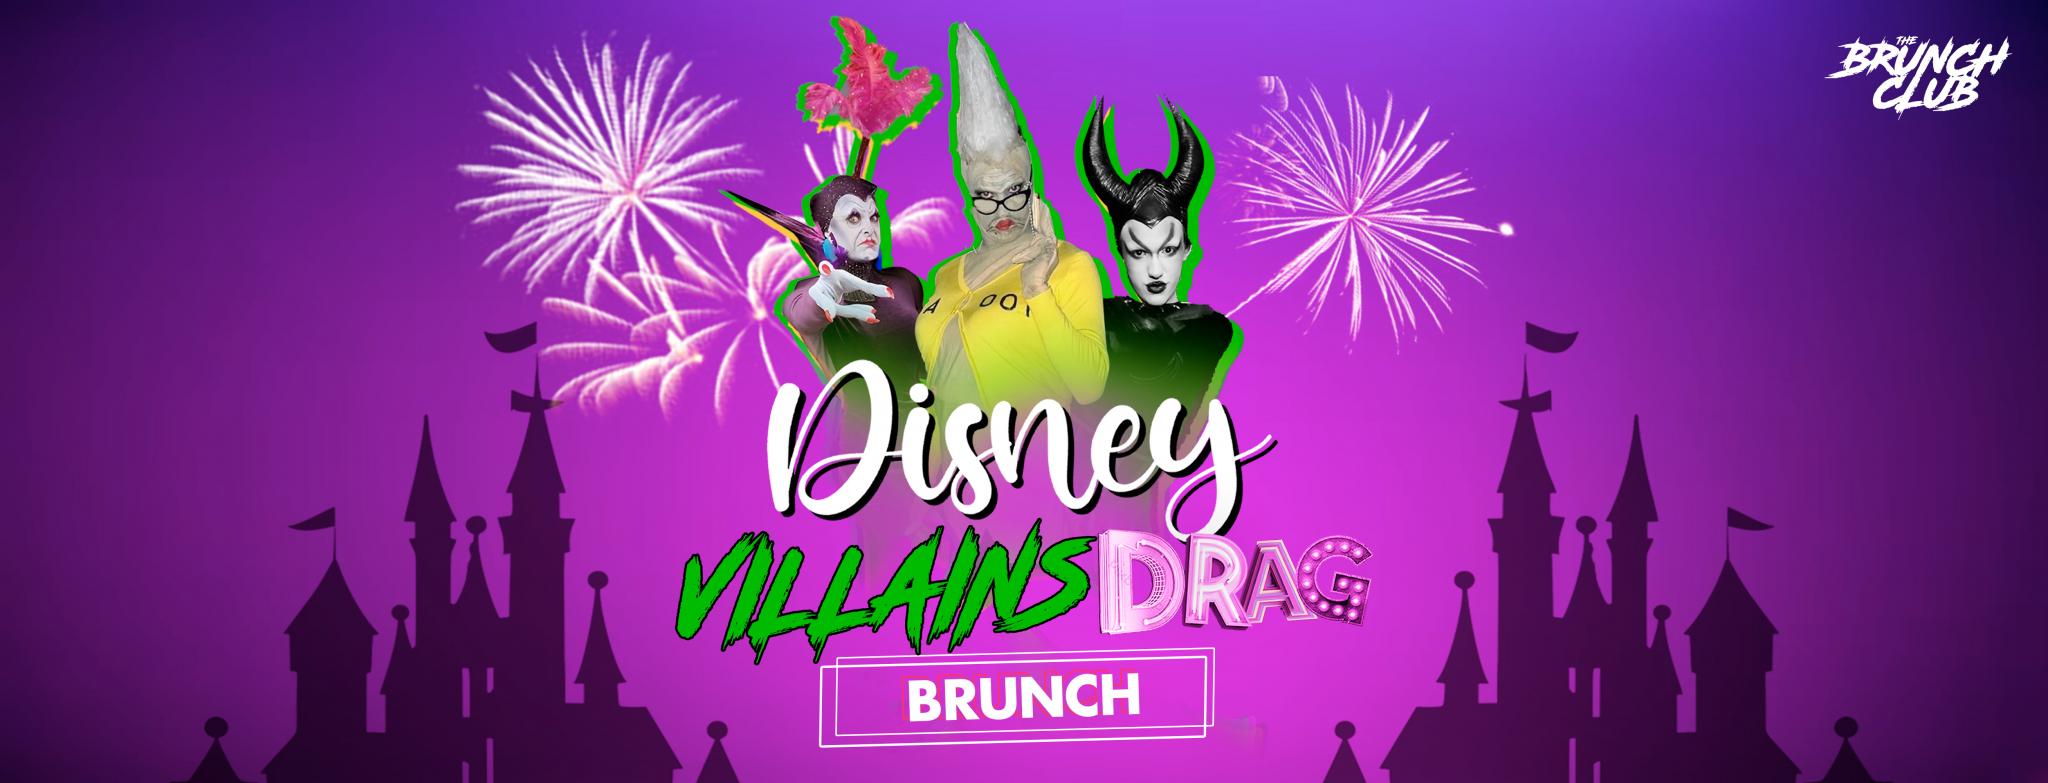 Disney Villains Drag Bottomless Brunch -  Portsmouth